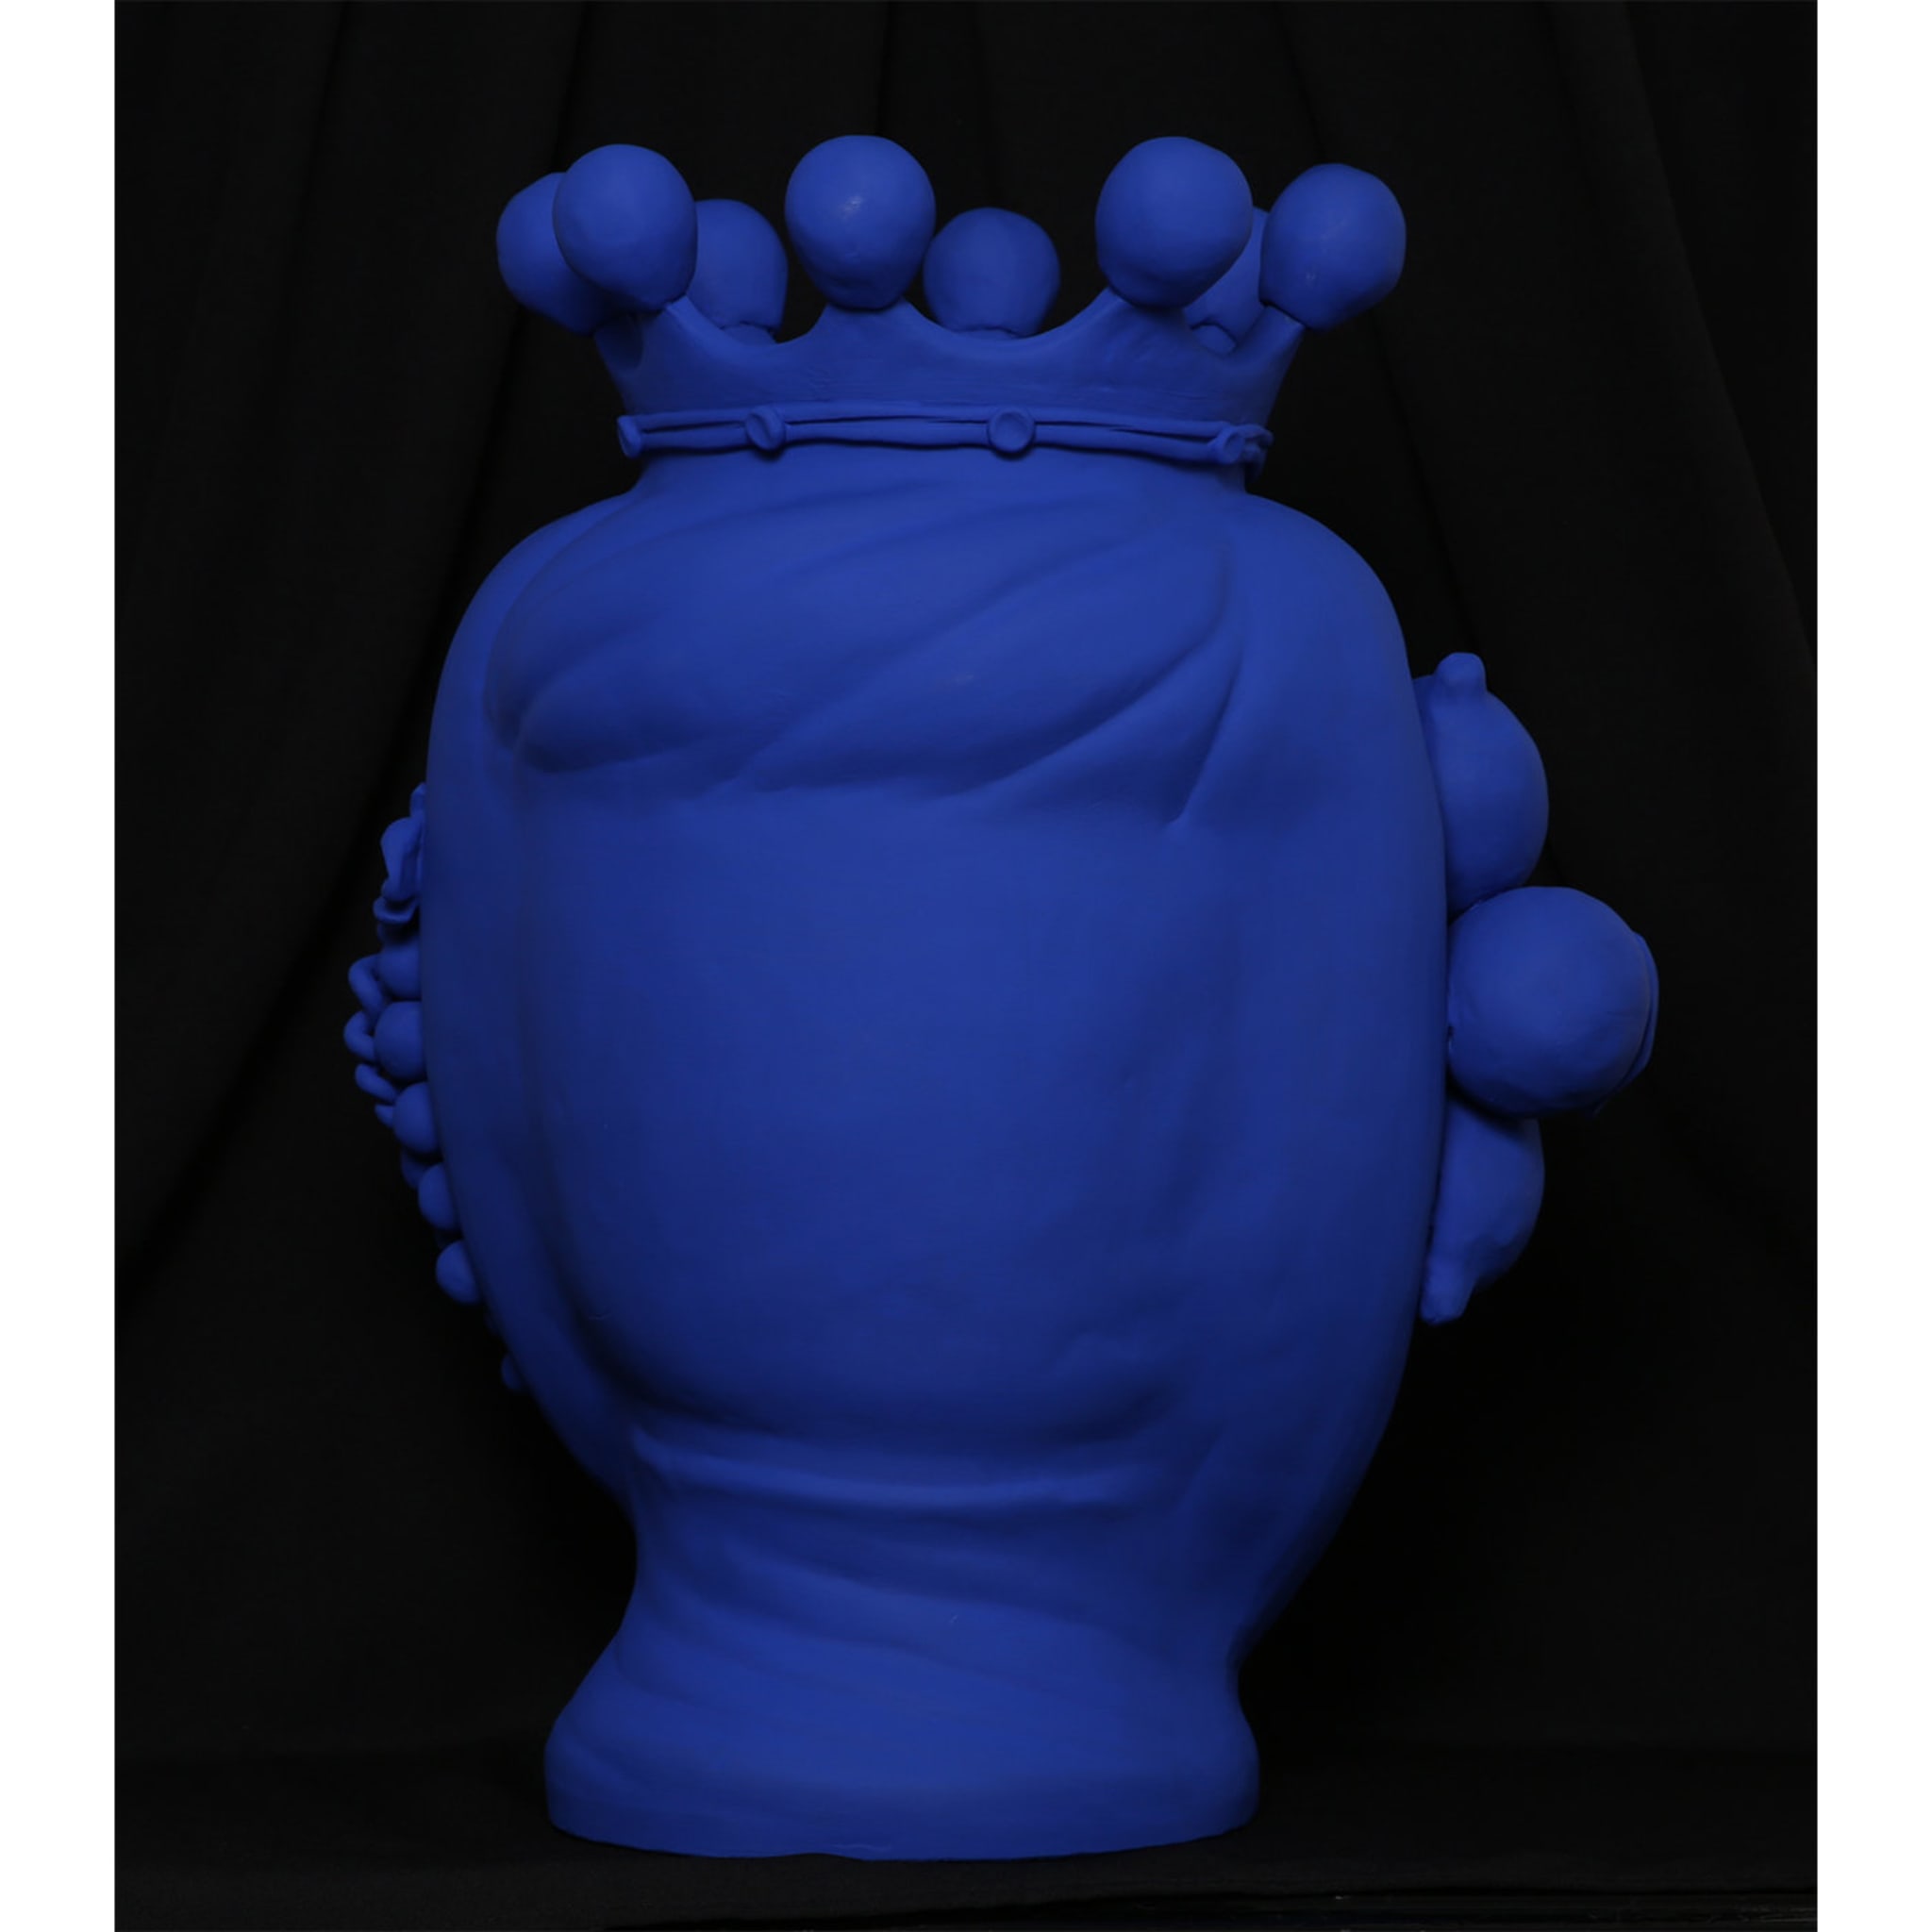 Donna Assunta Blue Oltremare Vase - Alternative view 2